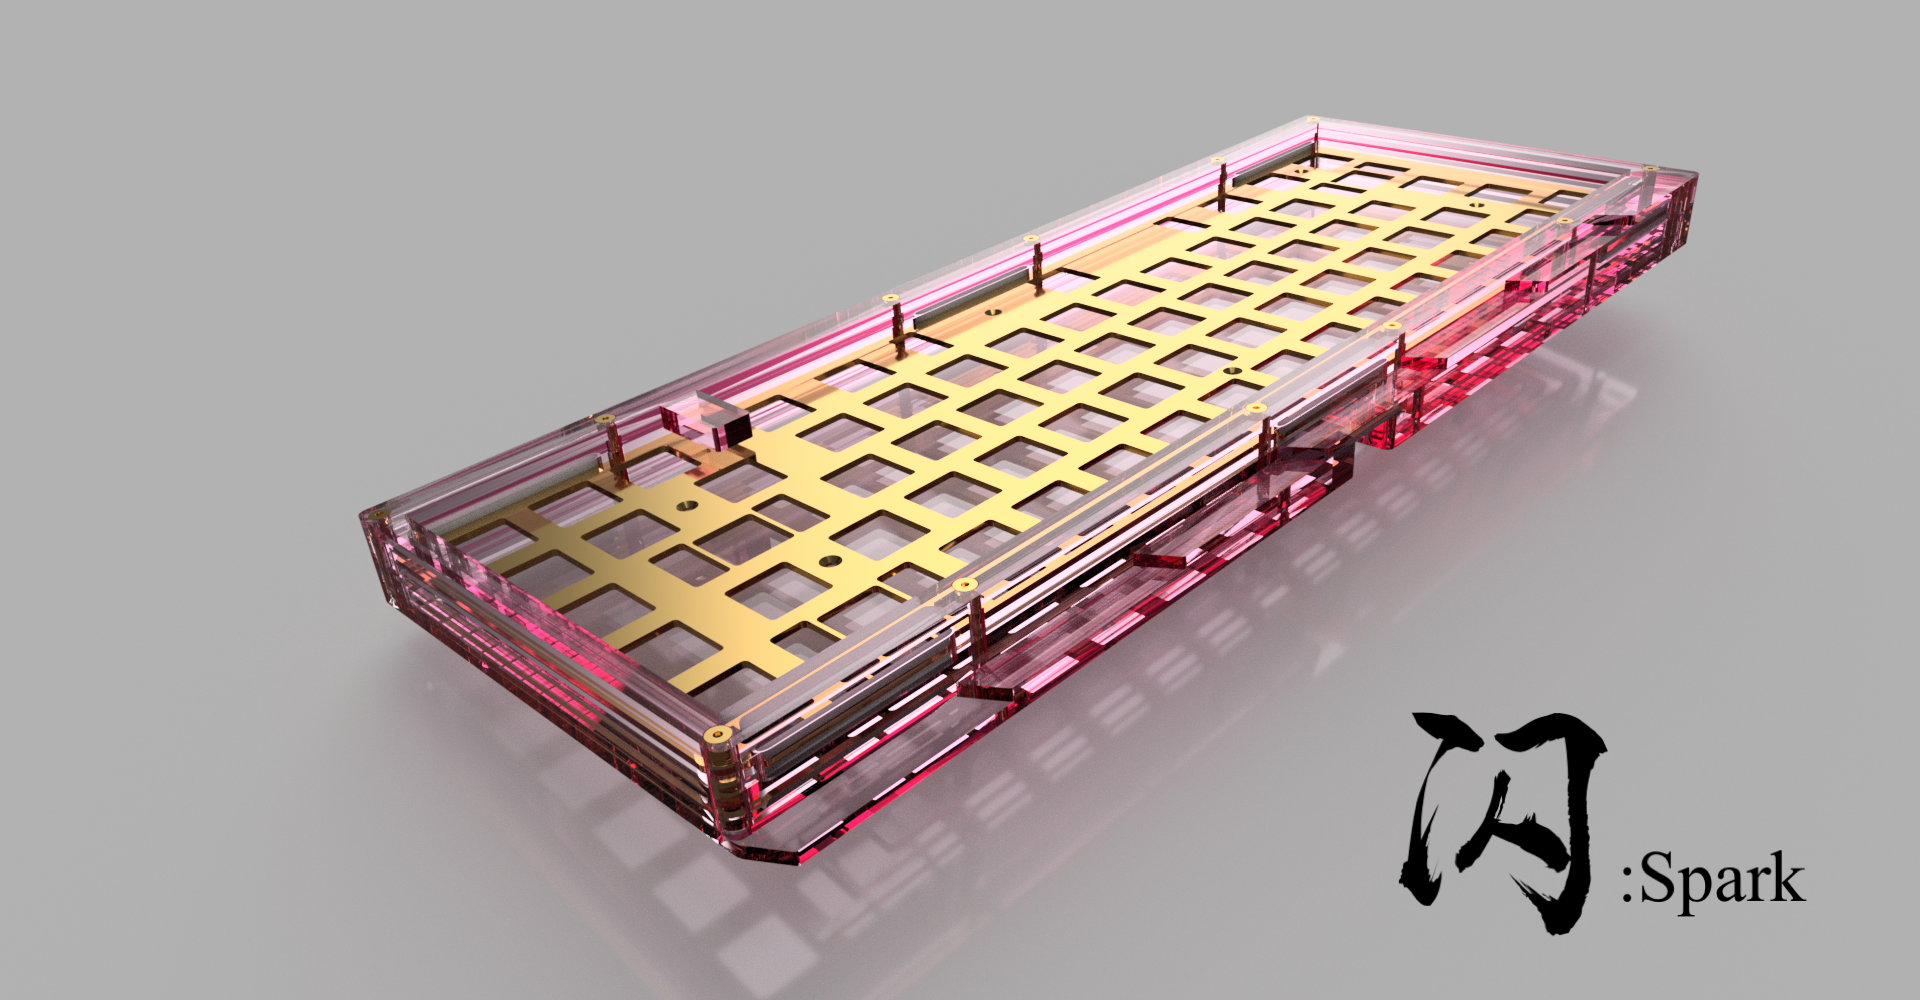 NEO Palette G67 Keyboard Kit